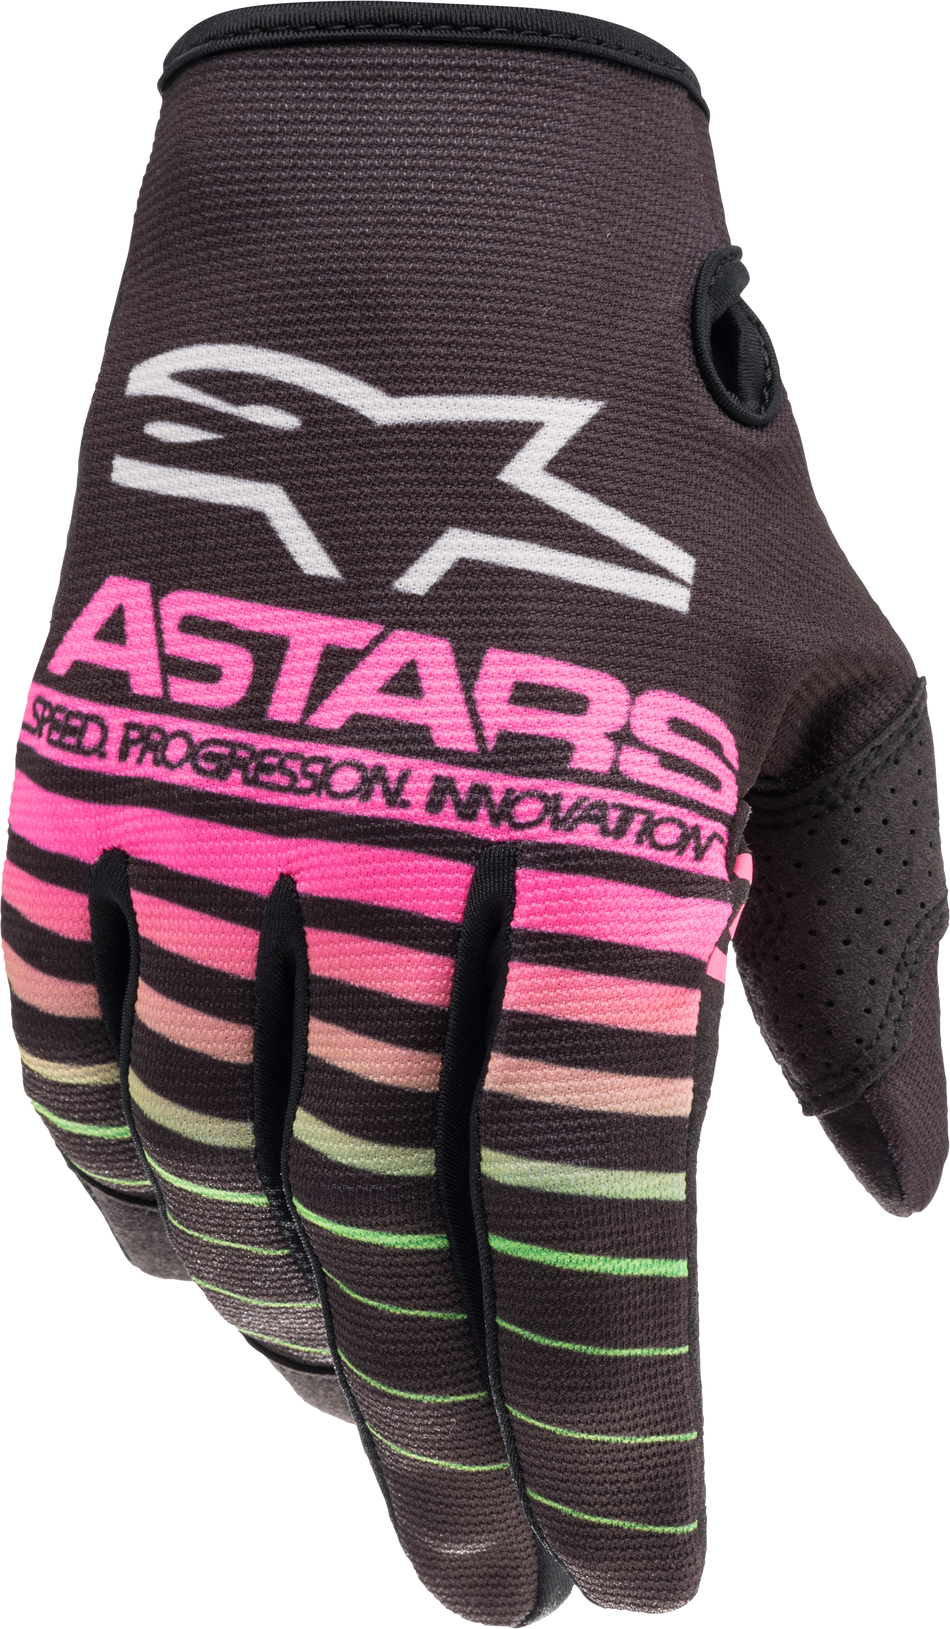 ALPINESTARS Youth Radar Gloves Black/Green Neon/Pink Fluo Md 3541822-1669-M